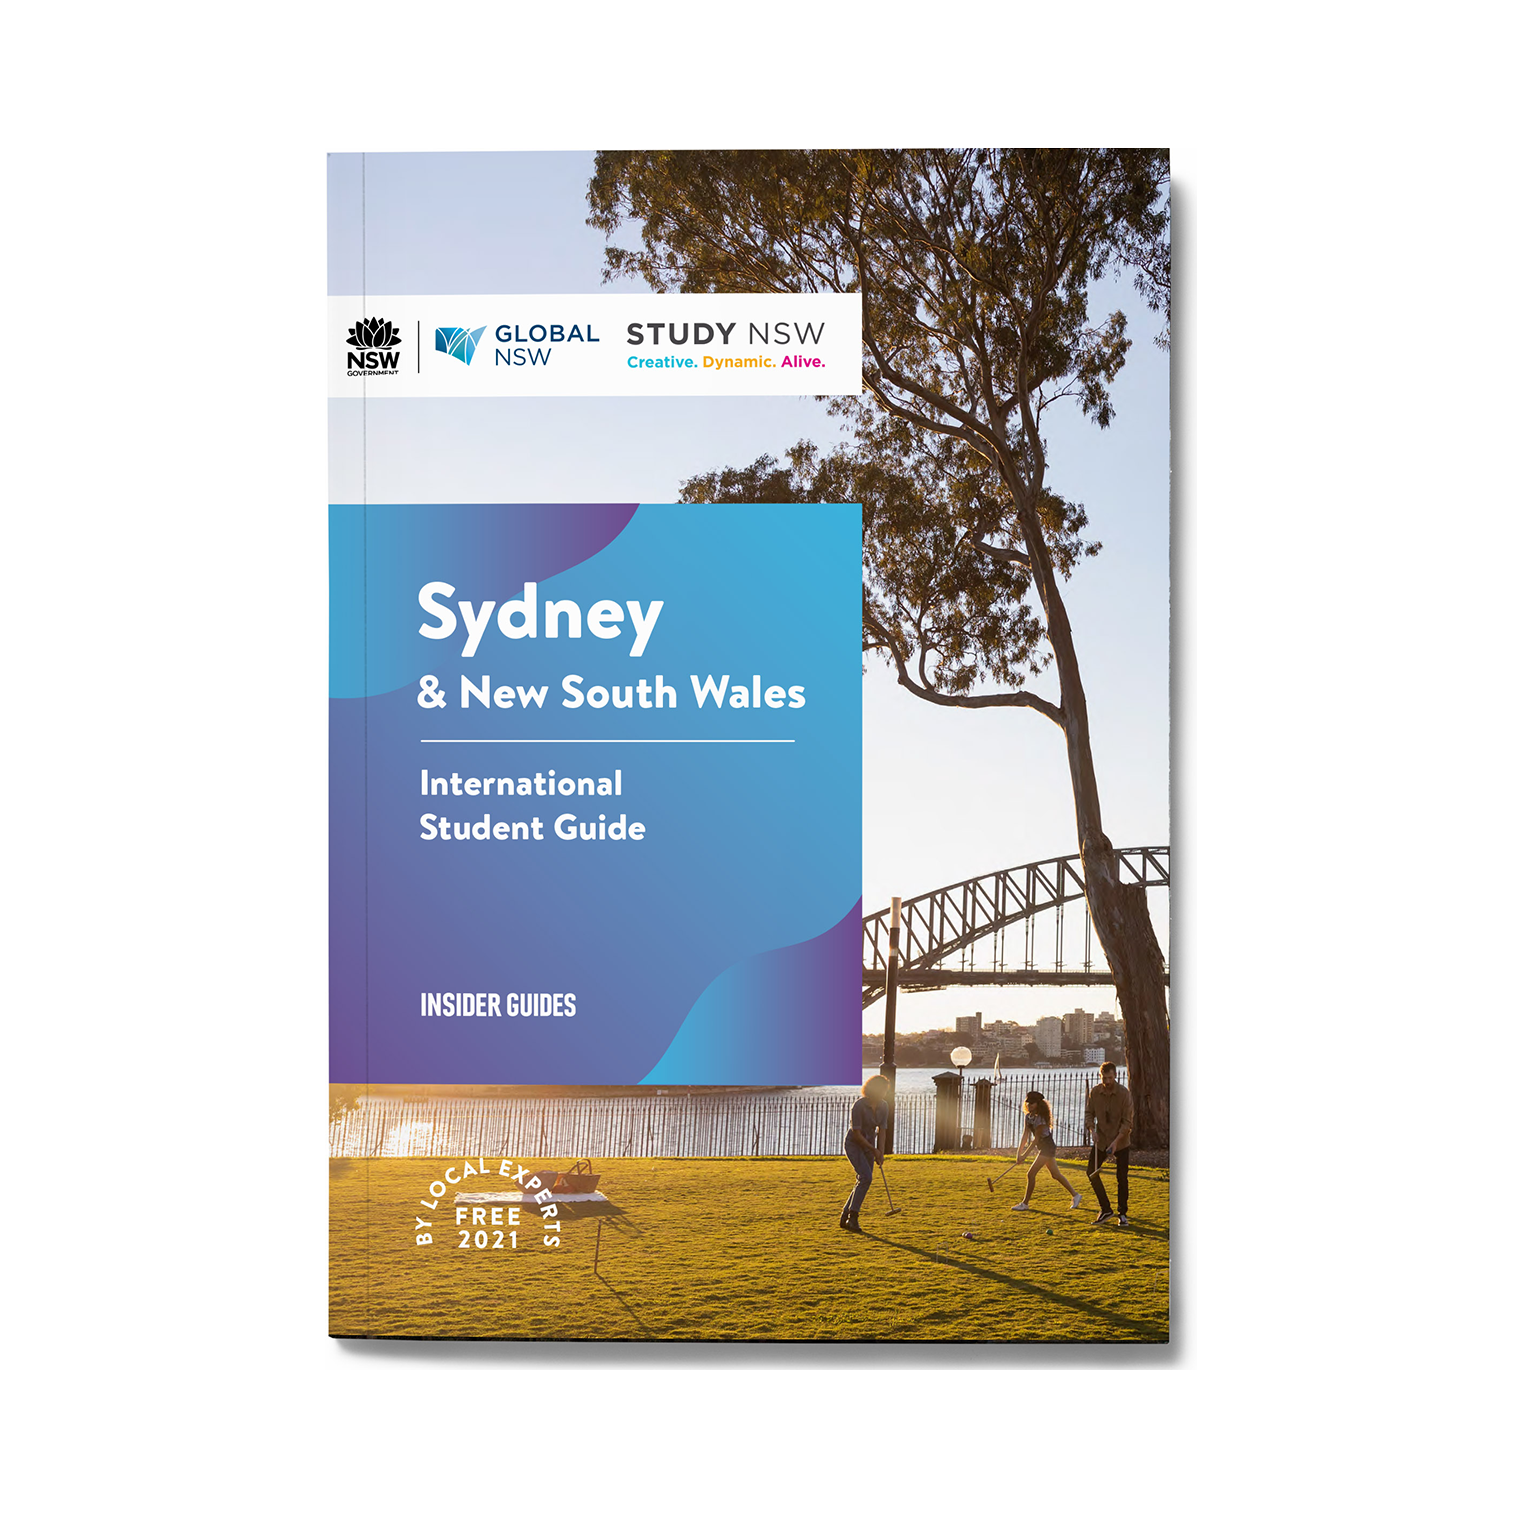 Sydney Guide